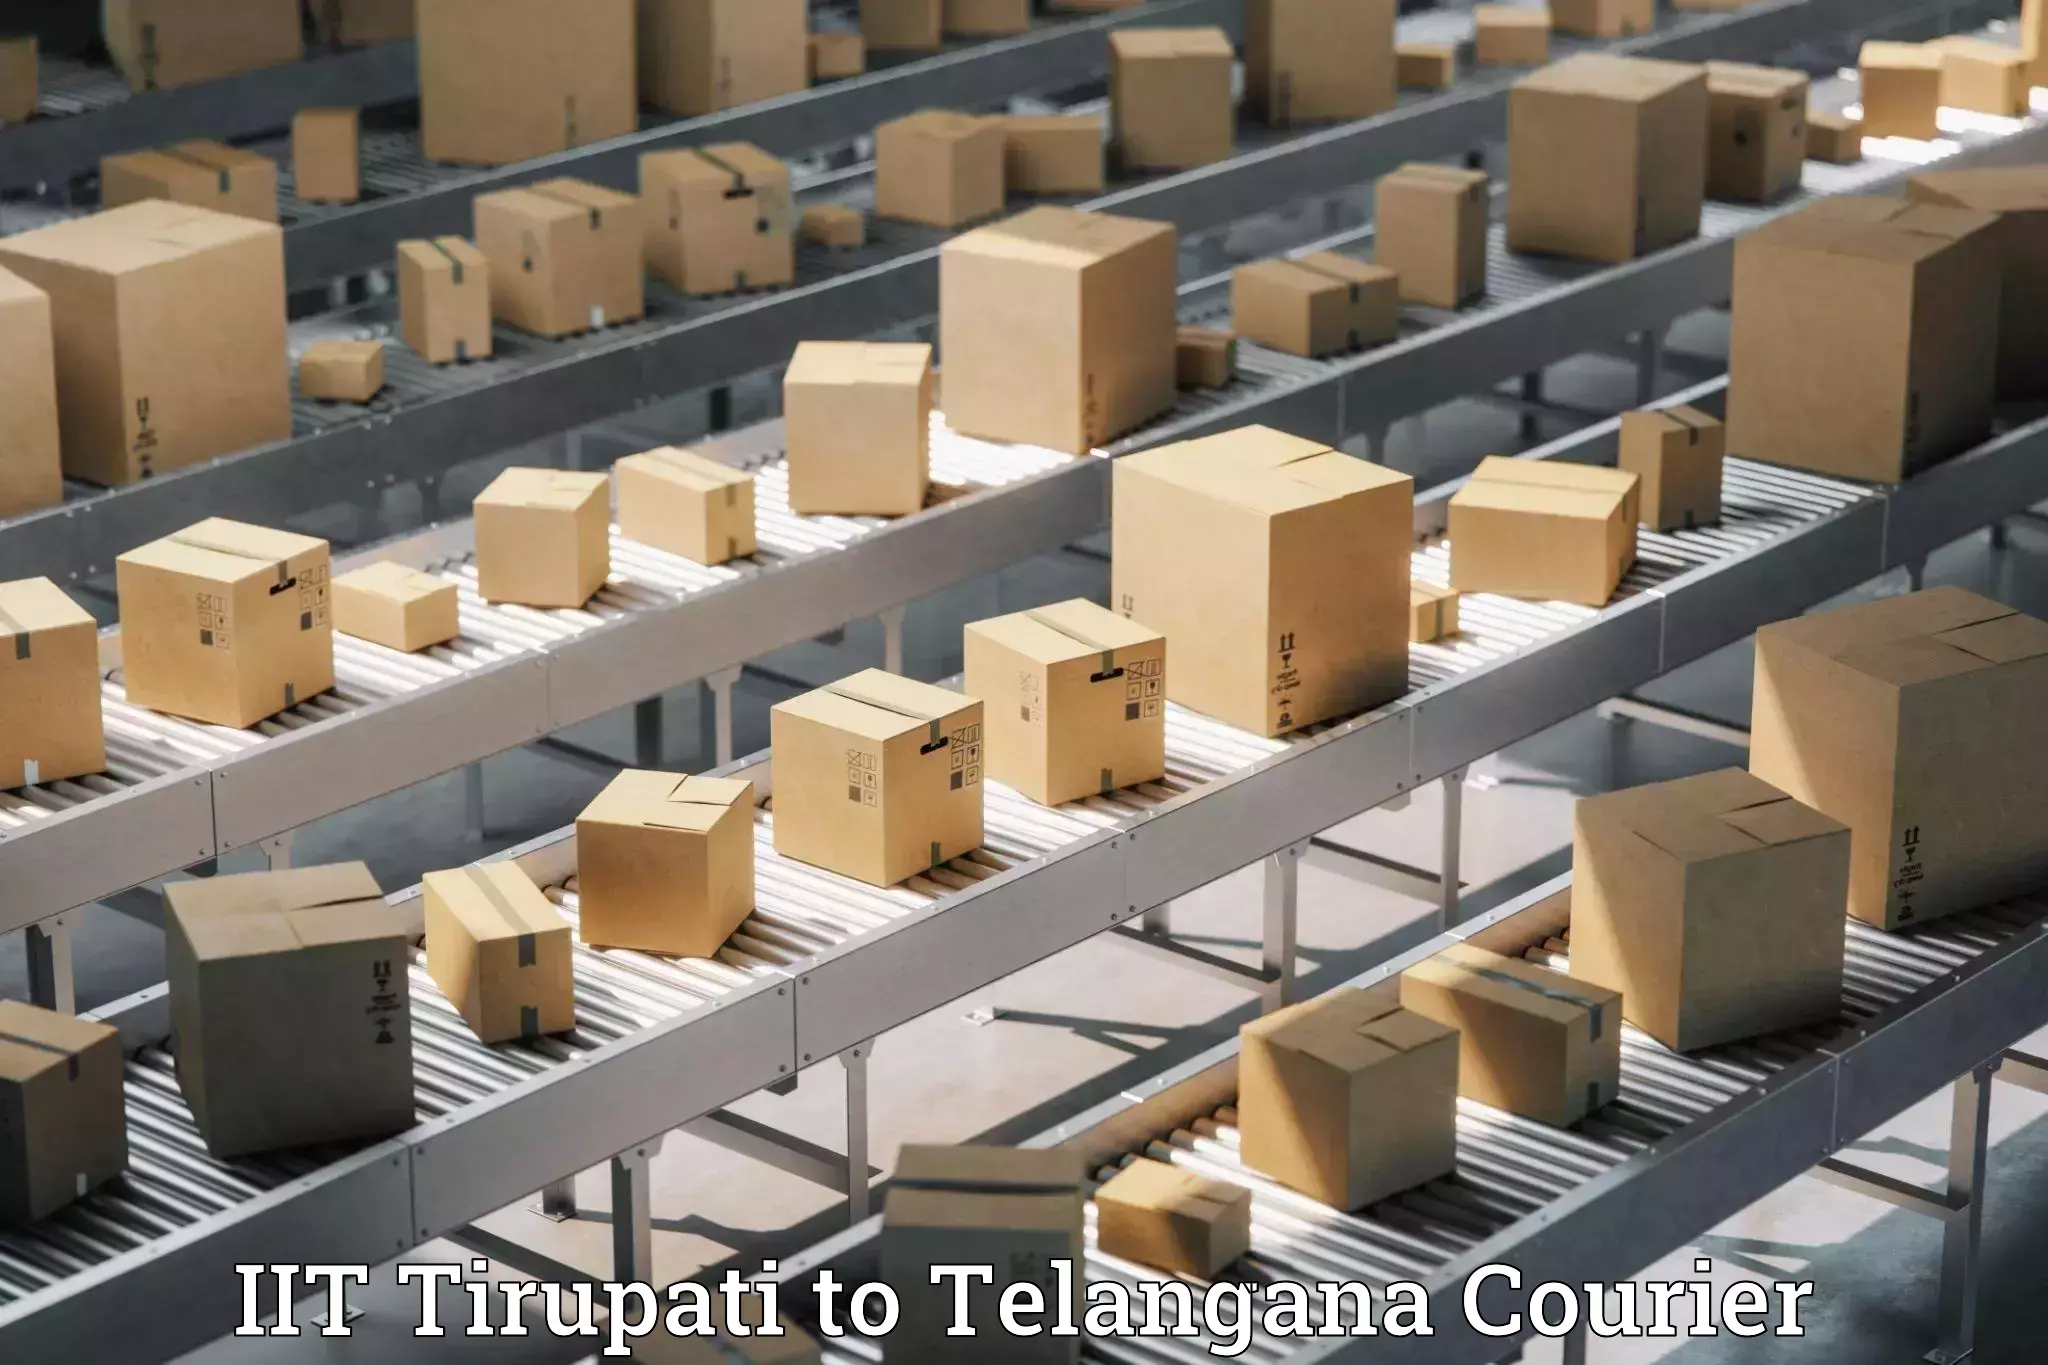 Advanced shipping technology in IIT Tirupati to Miryalaguda